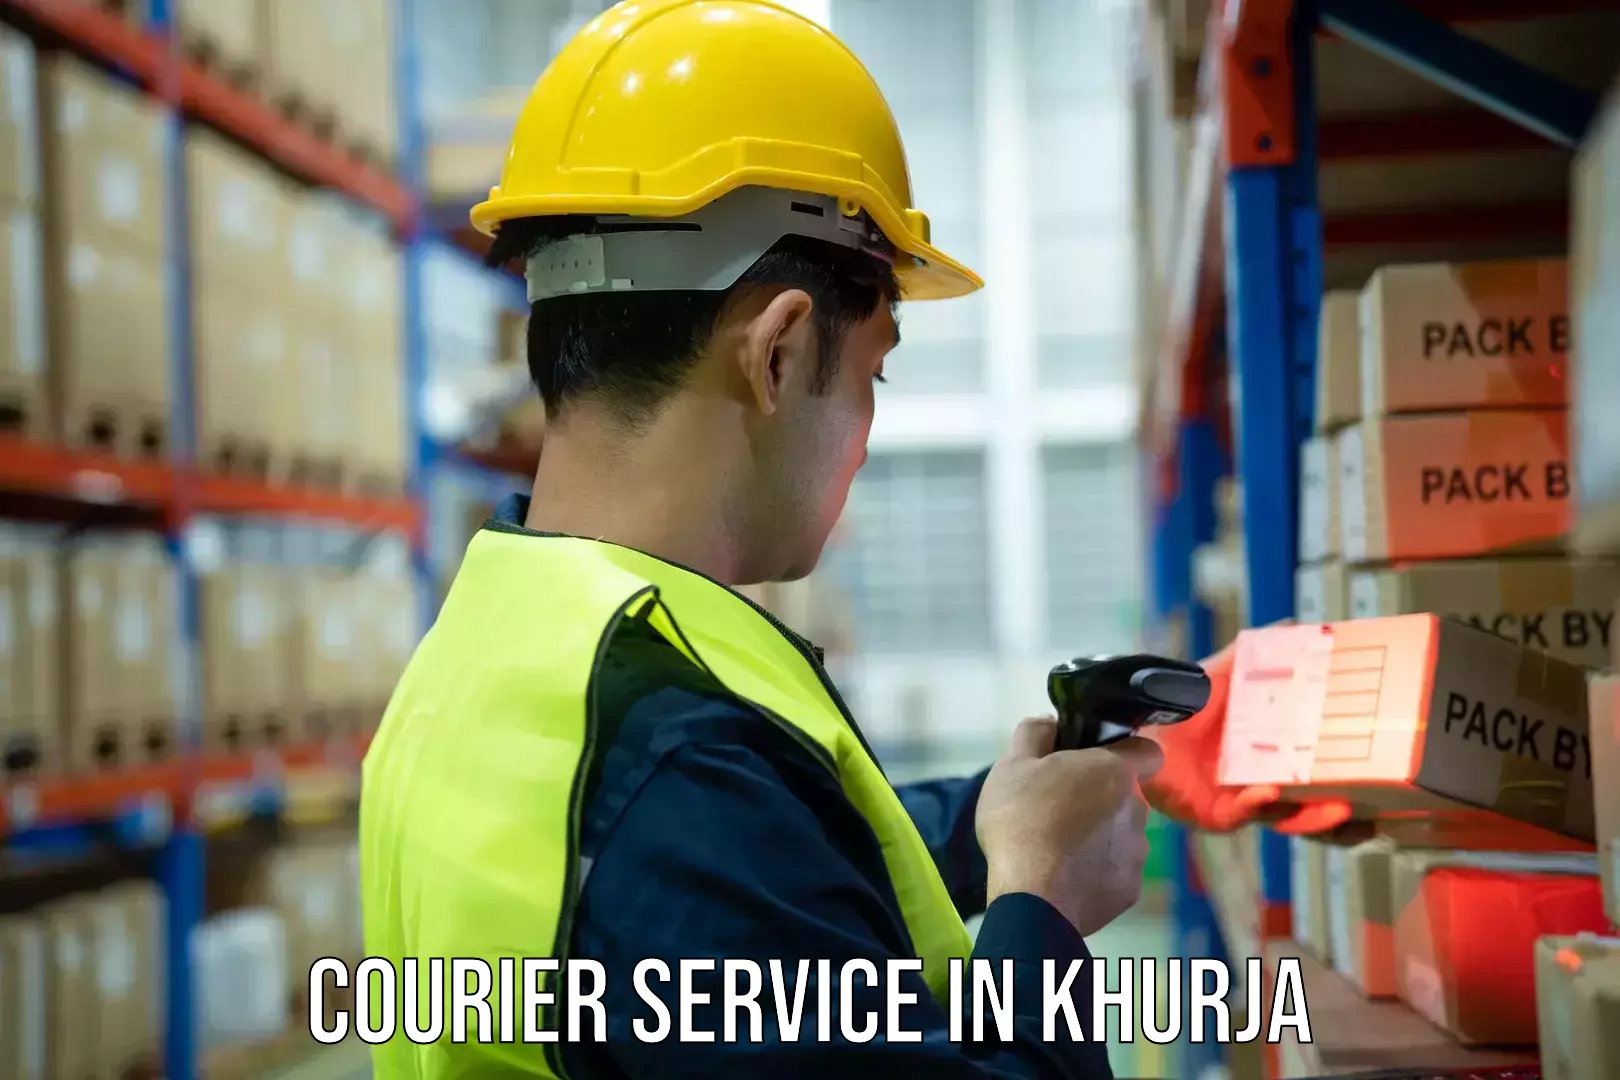 Modern delivery technologies in Khurja